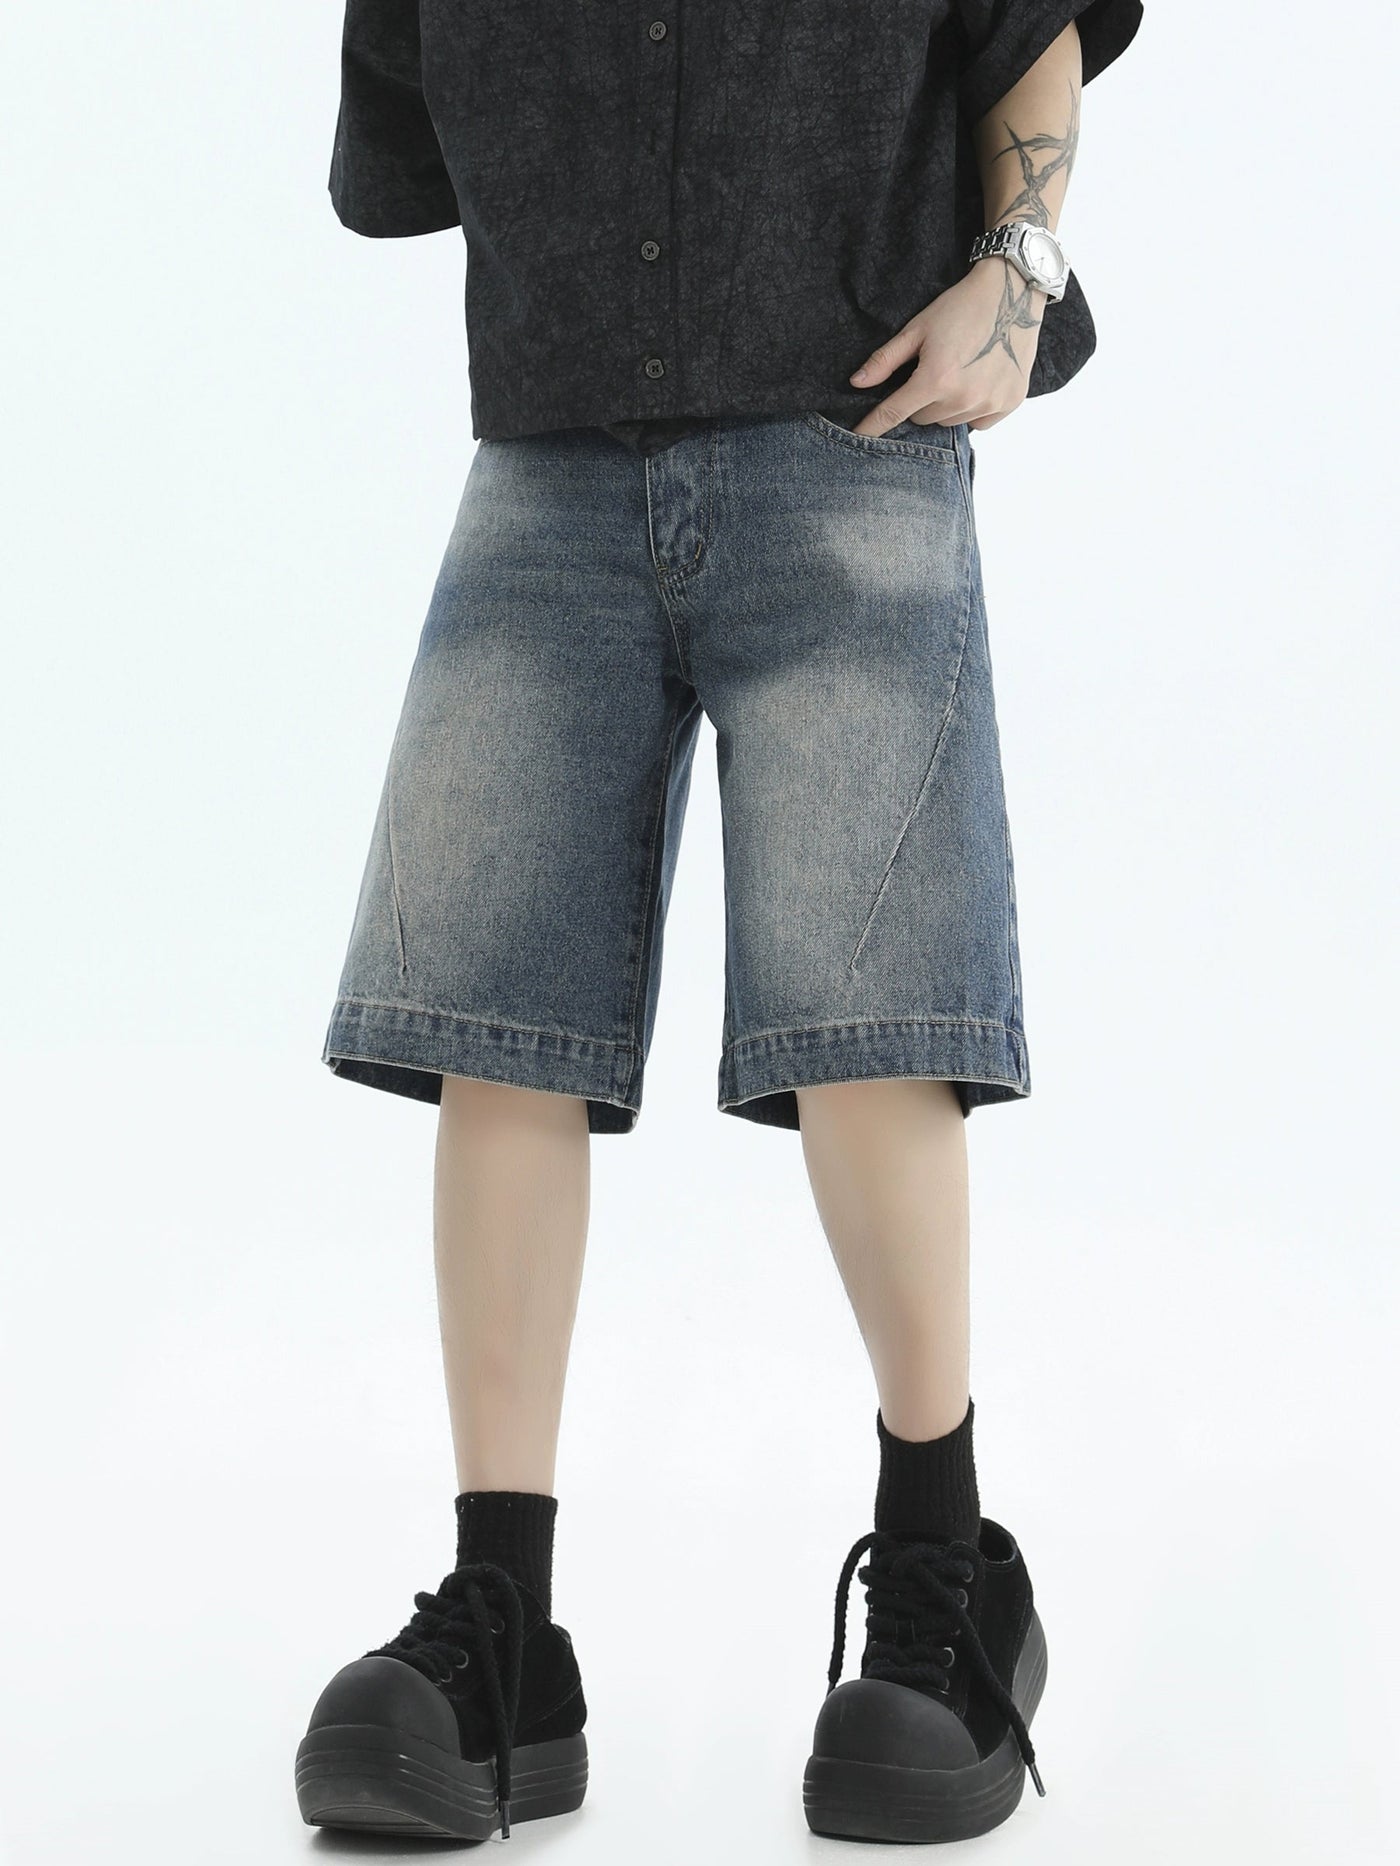 Faded Knee Denim Shorts Korean Street Fashion Shorts By INS Korea Shop Online at OH Vault